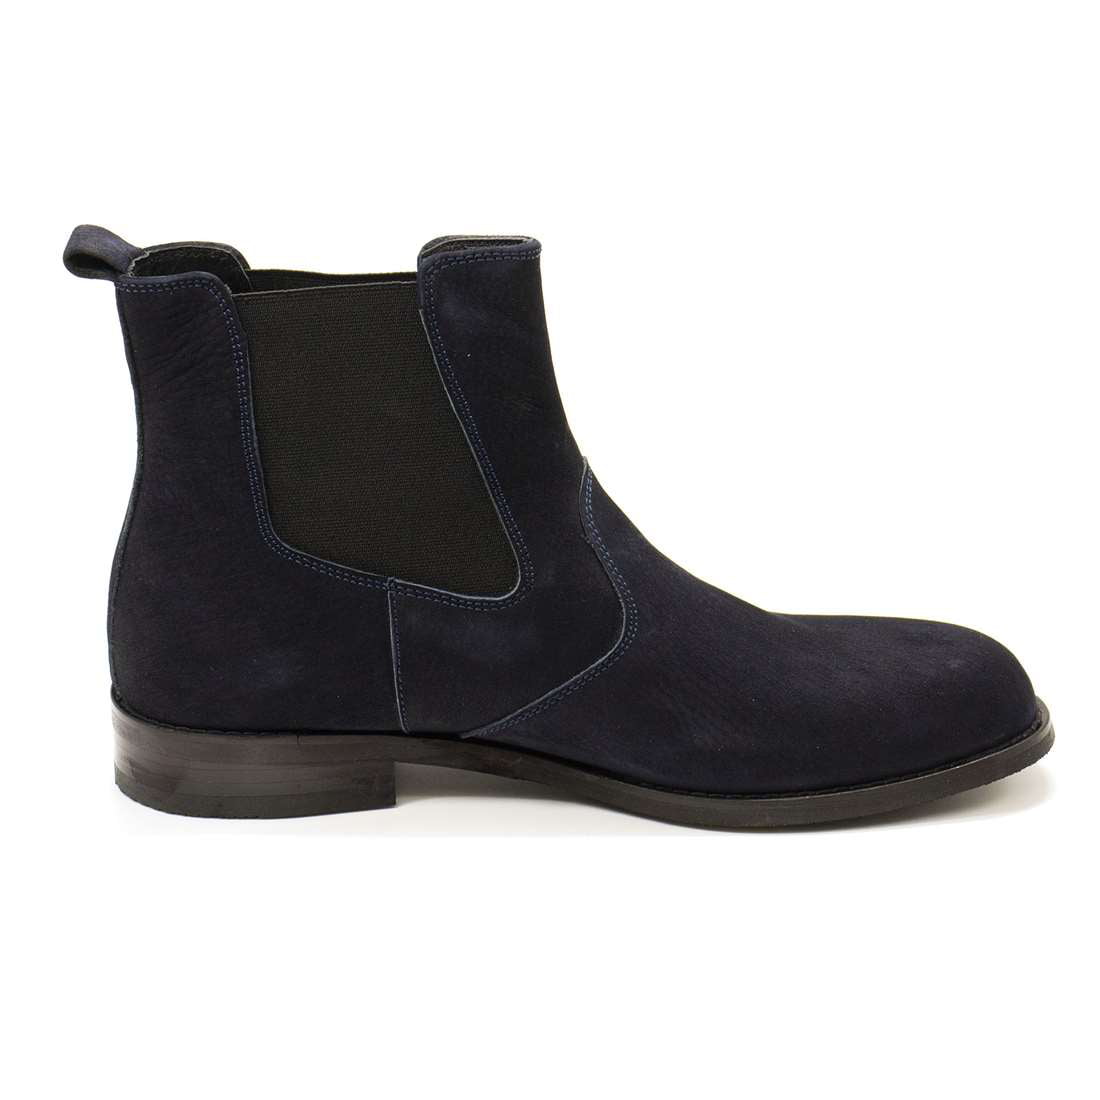 Elegante Men's Daniel Leather Chelsea Boots, Nera Nubuck Blue,11 M US ...